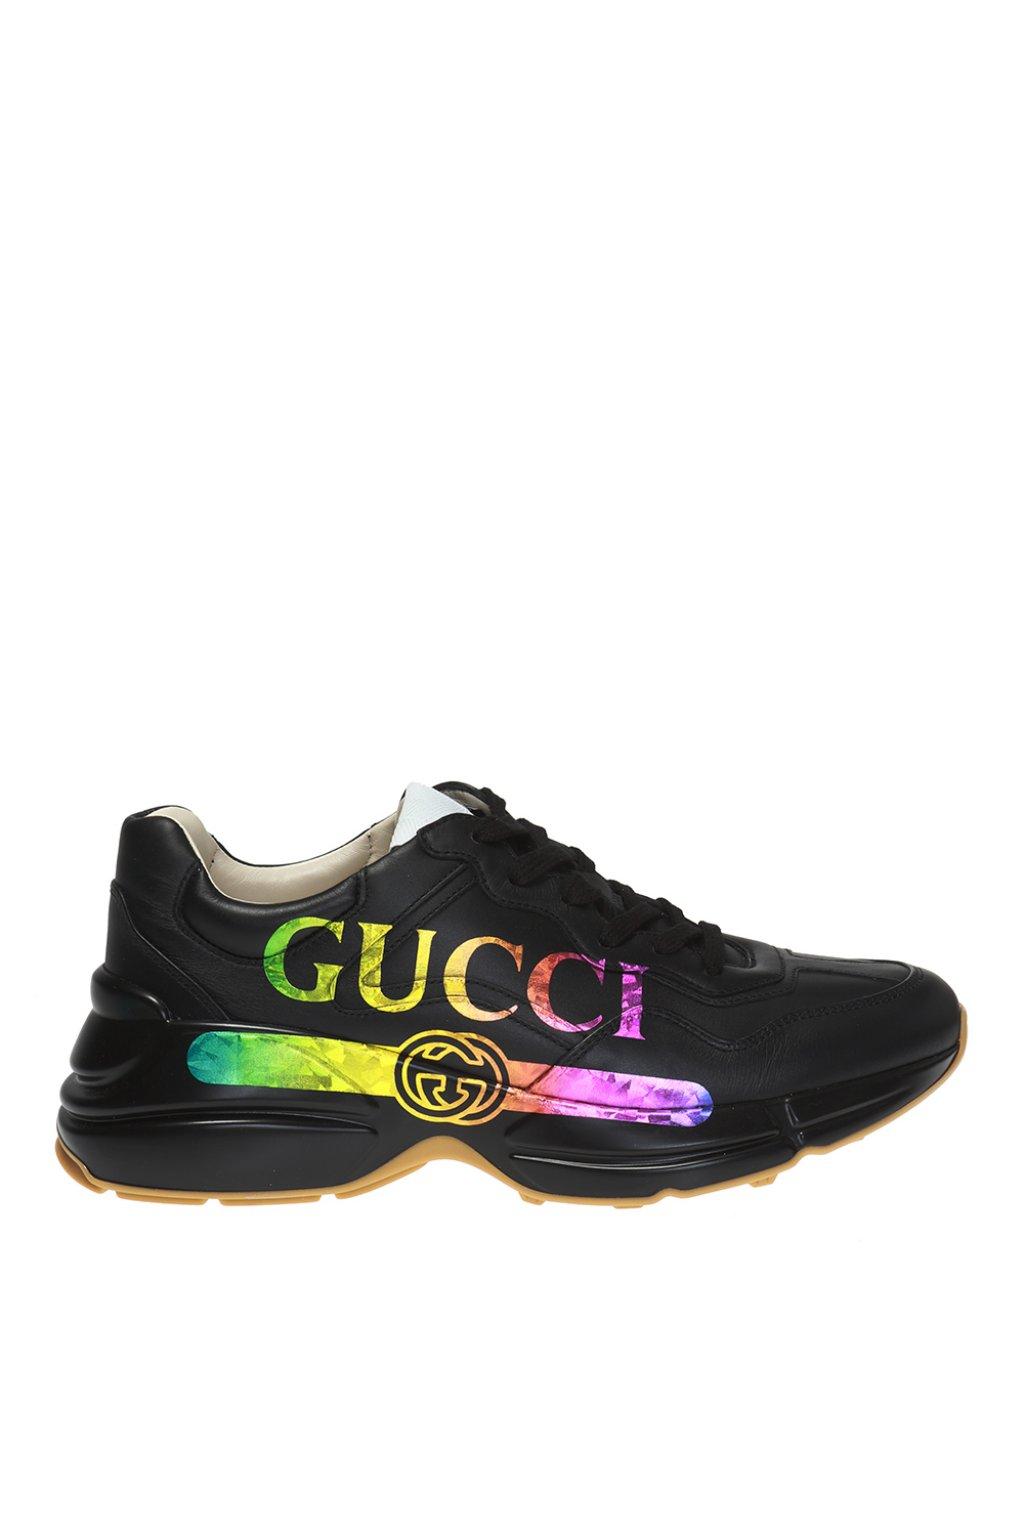 gucci rainbow trainers